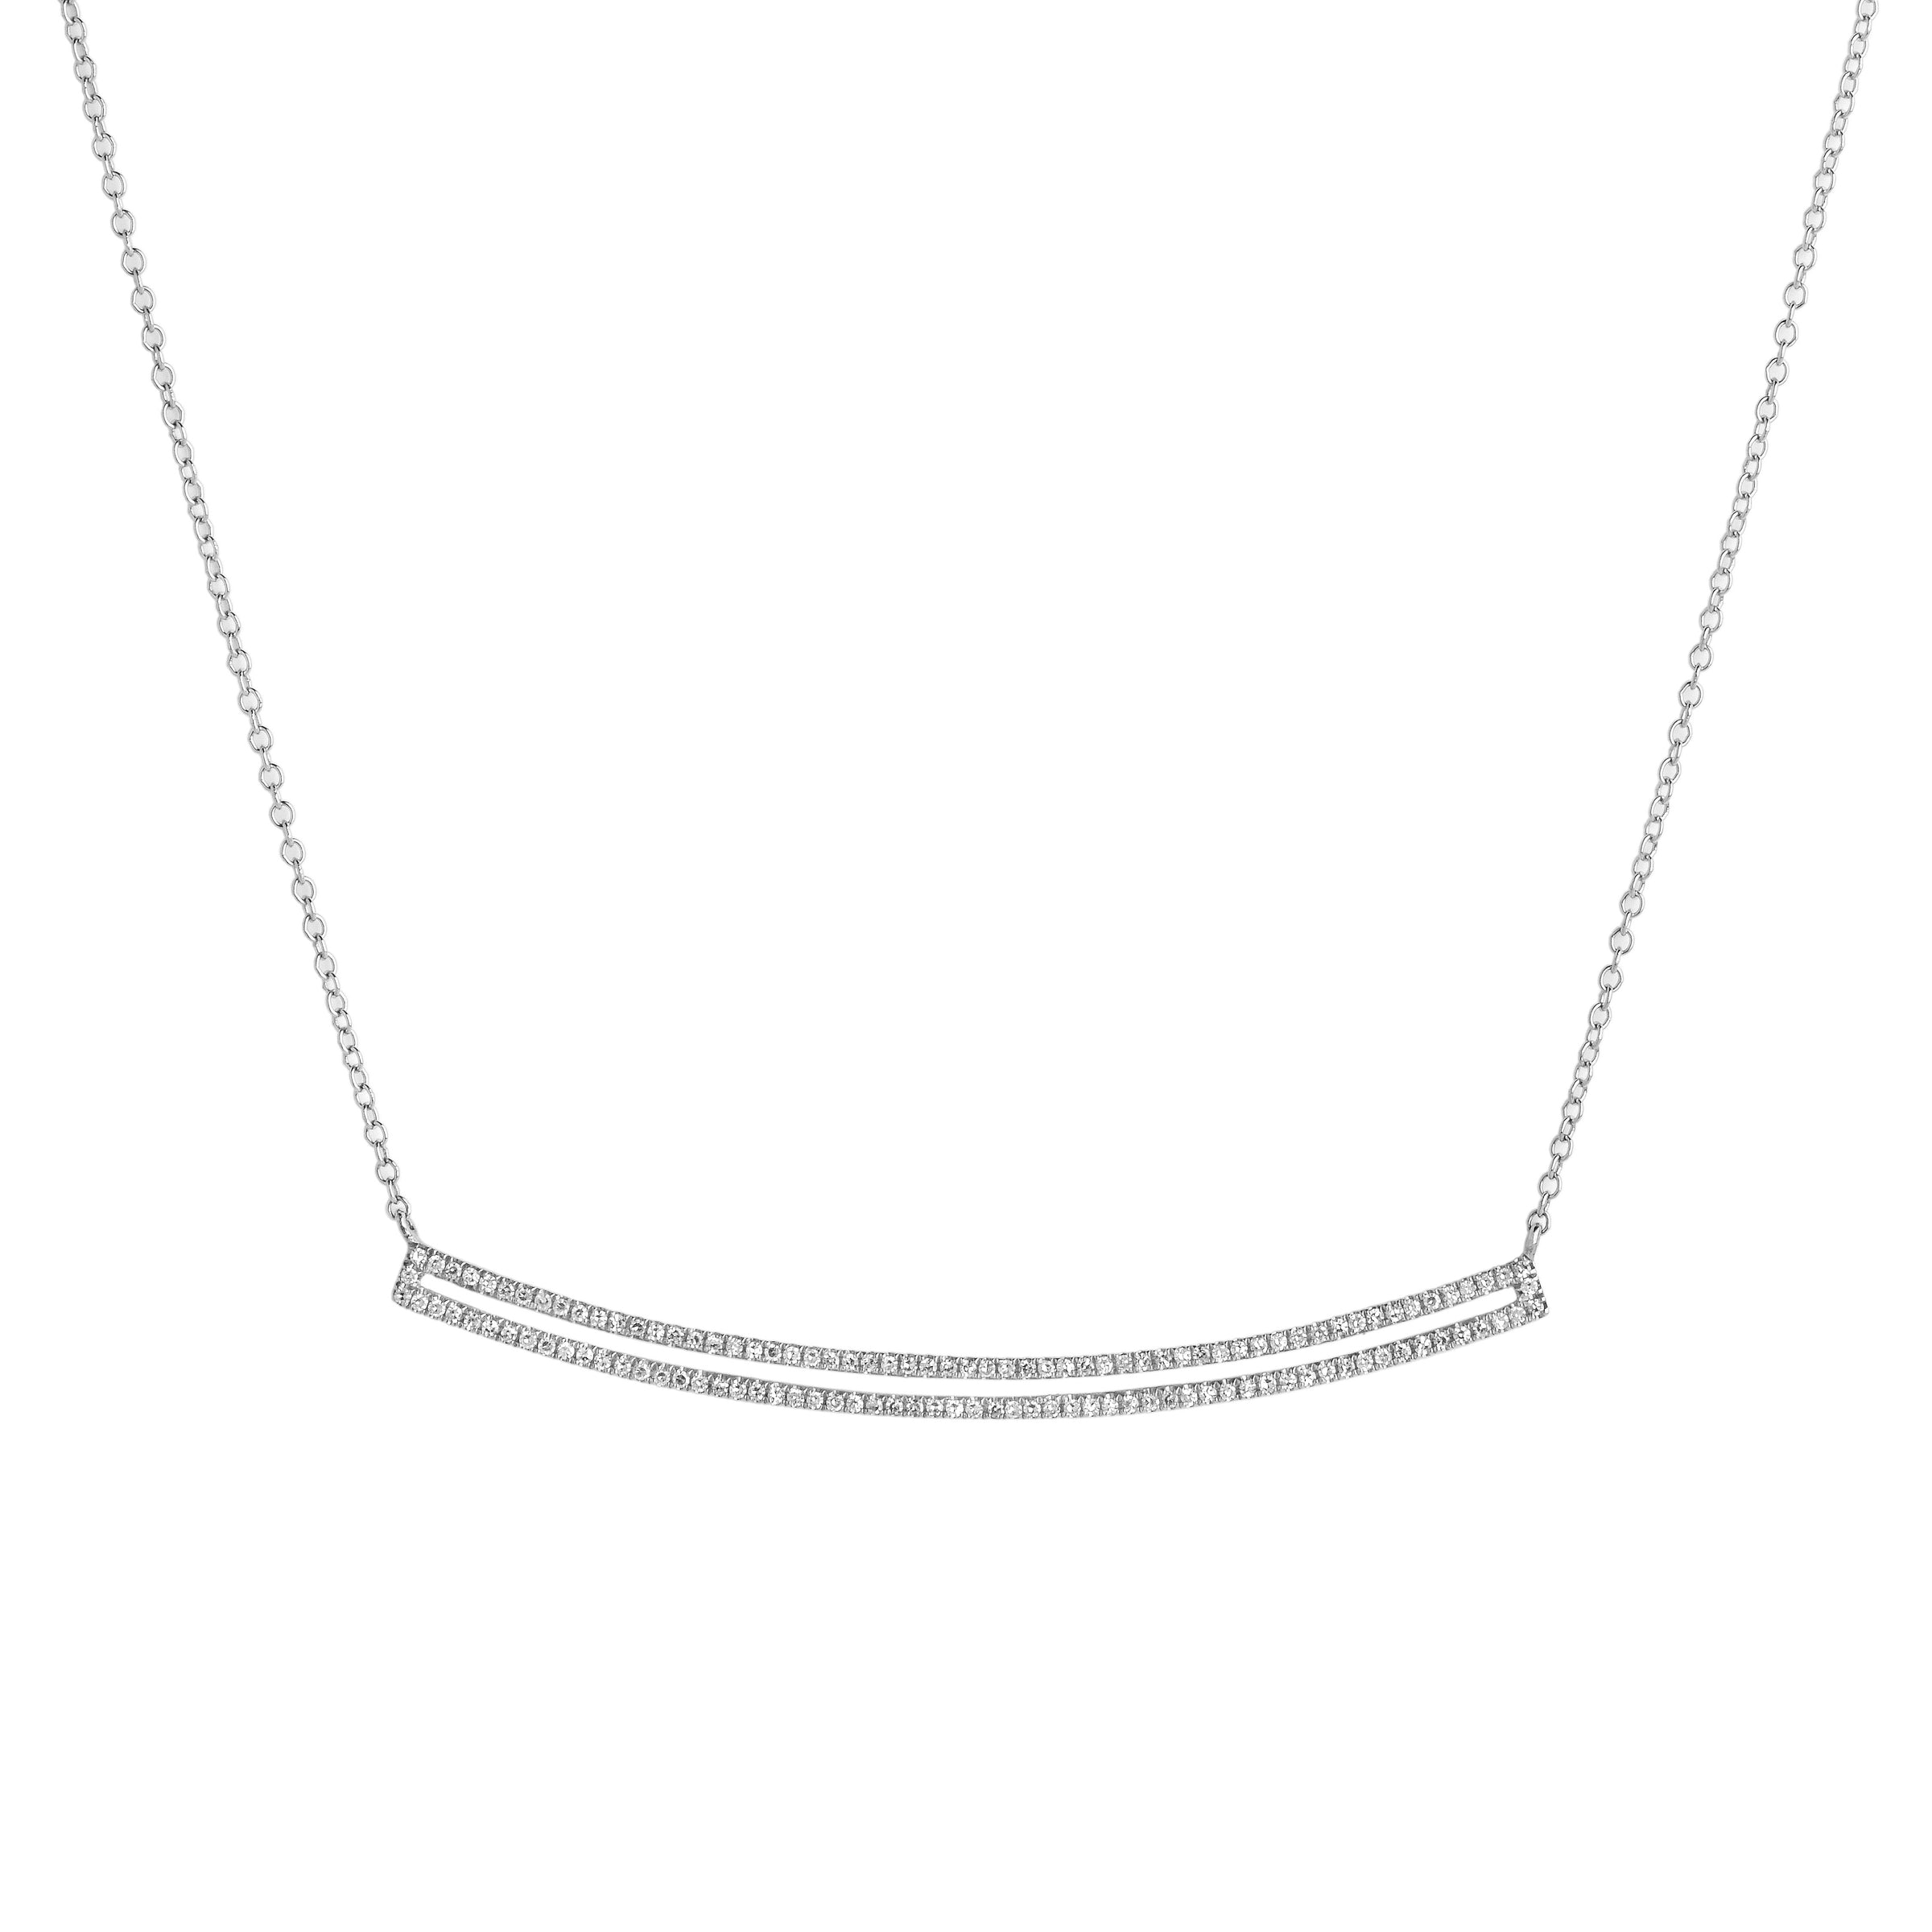 CURVED OPEN BAR DIAMOND NECKLACE - Bridget King Jewelry